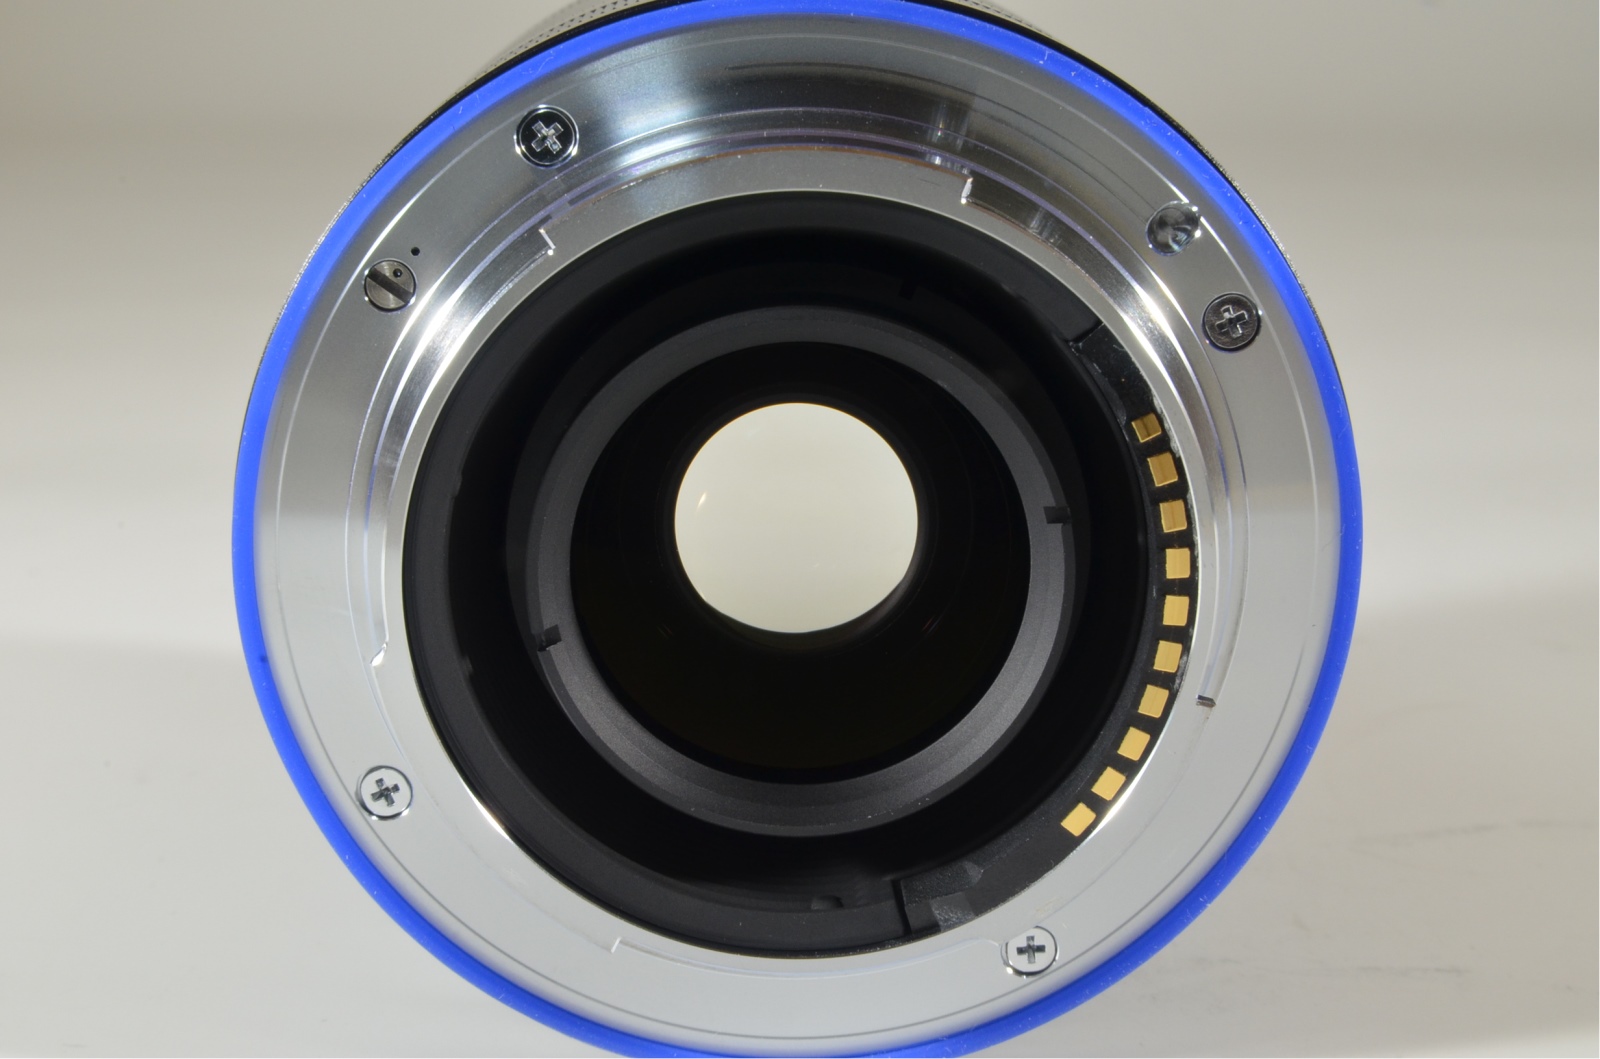 carl zeiss loxia 35mm f/2 biogon t* lens for sony e mount